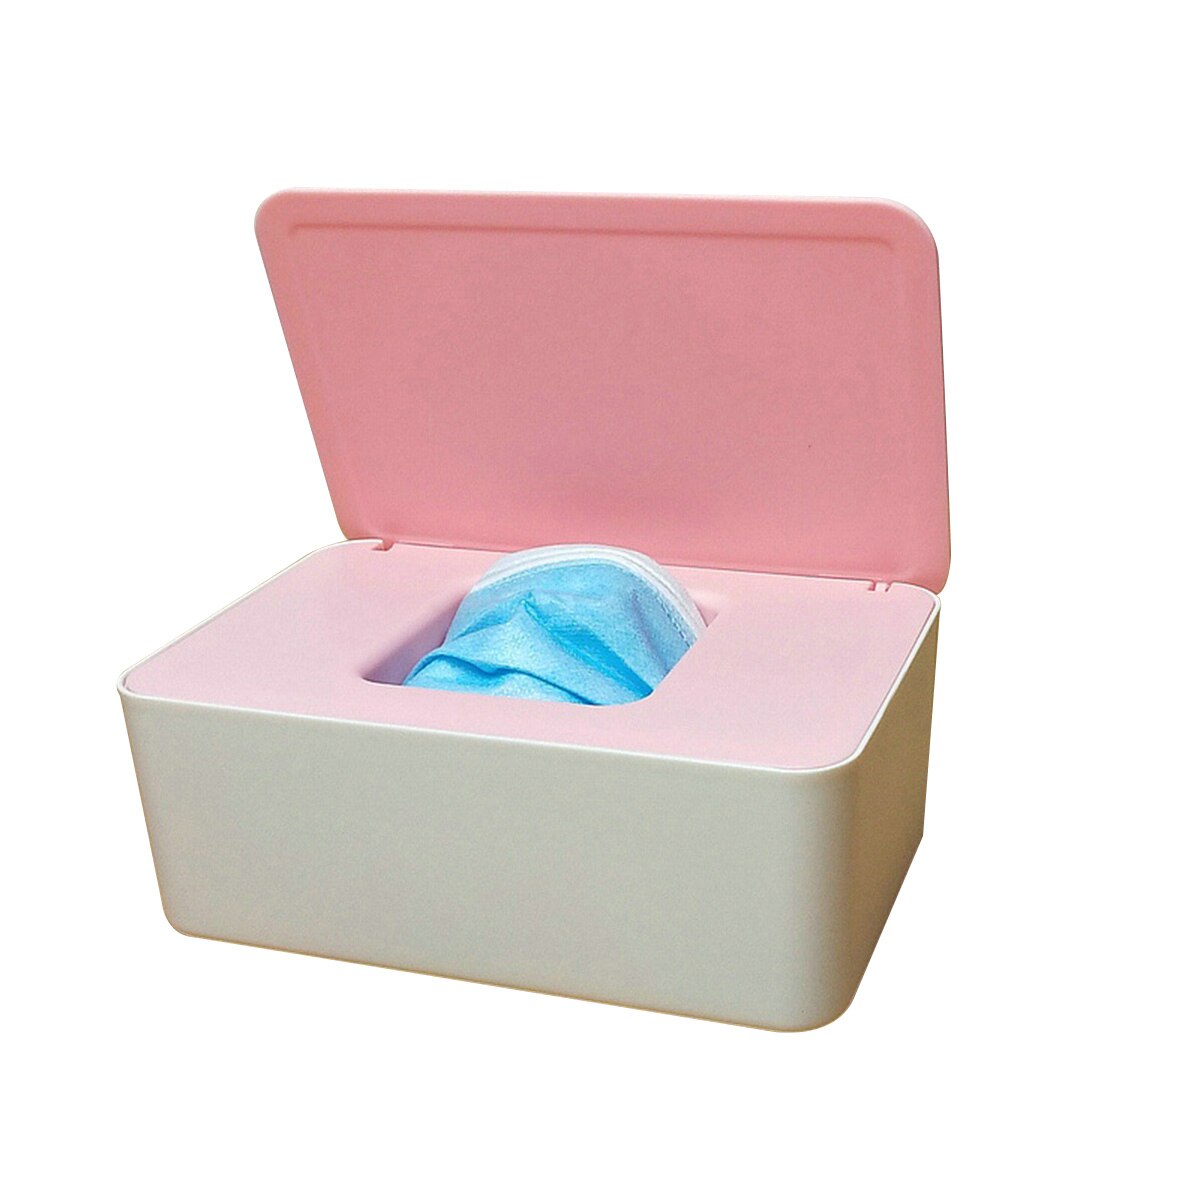 Bleeservietter dispenser babyservietter æske babyservietter holder kludene frisk perfekt udseende: Pulverlåg hvid